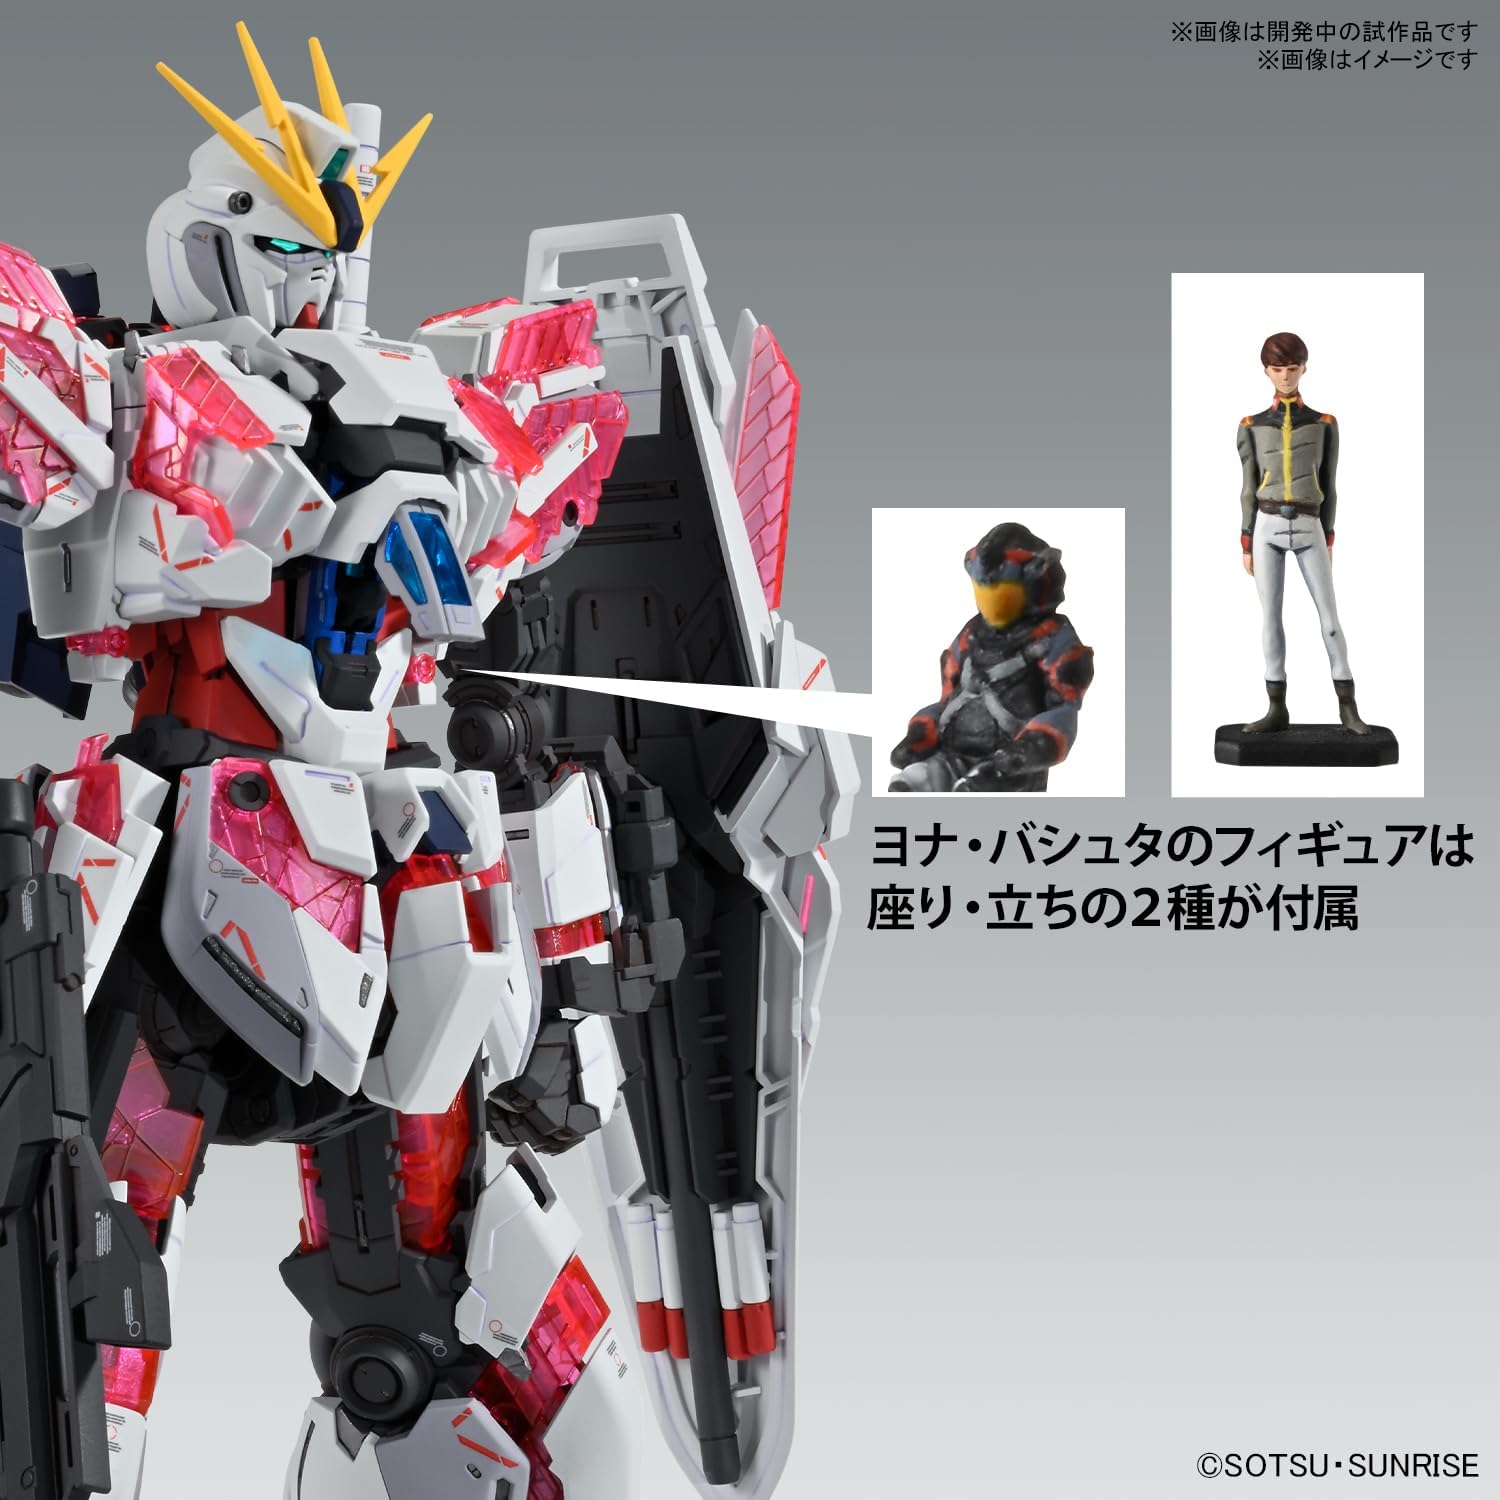 Bandai MG Mobile Suit Gundam NT Narrative Gundam C Equipment Ver.Ka 1/100 Scale - BanzaiHobby